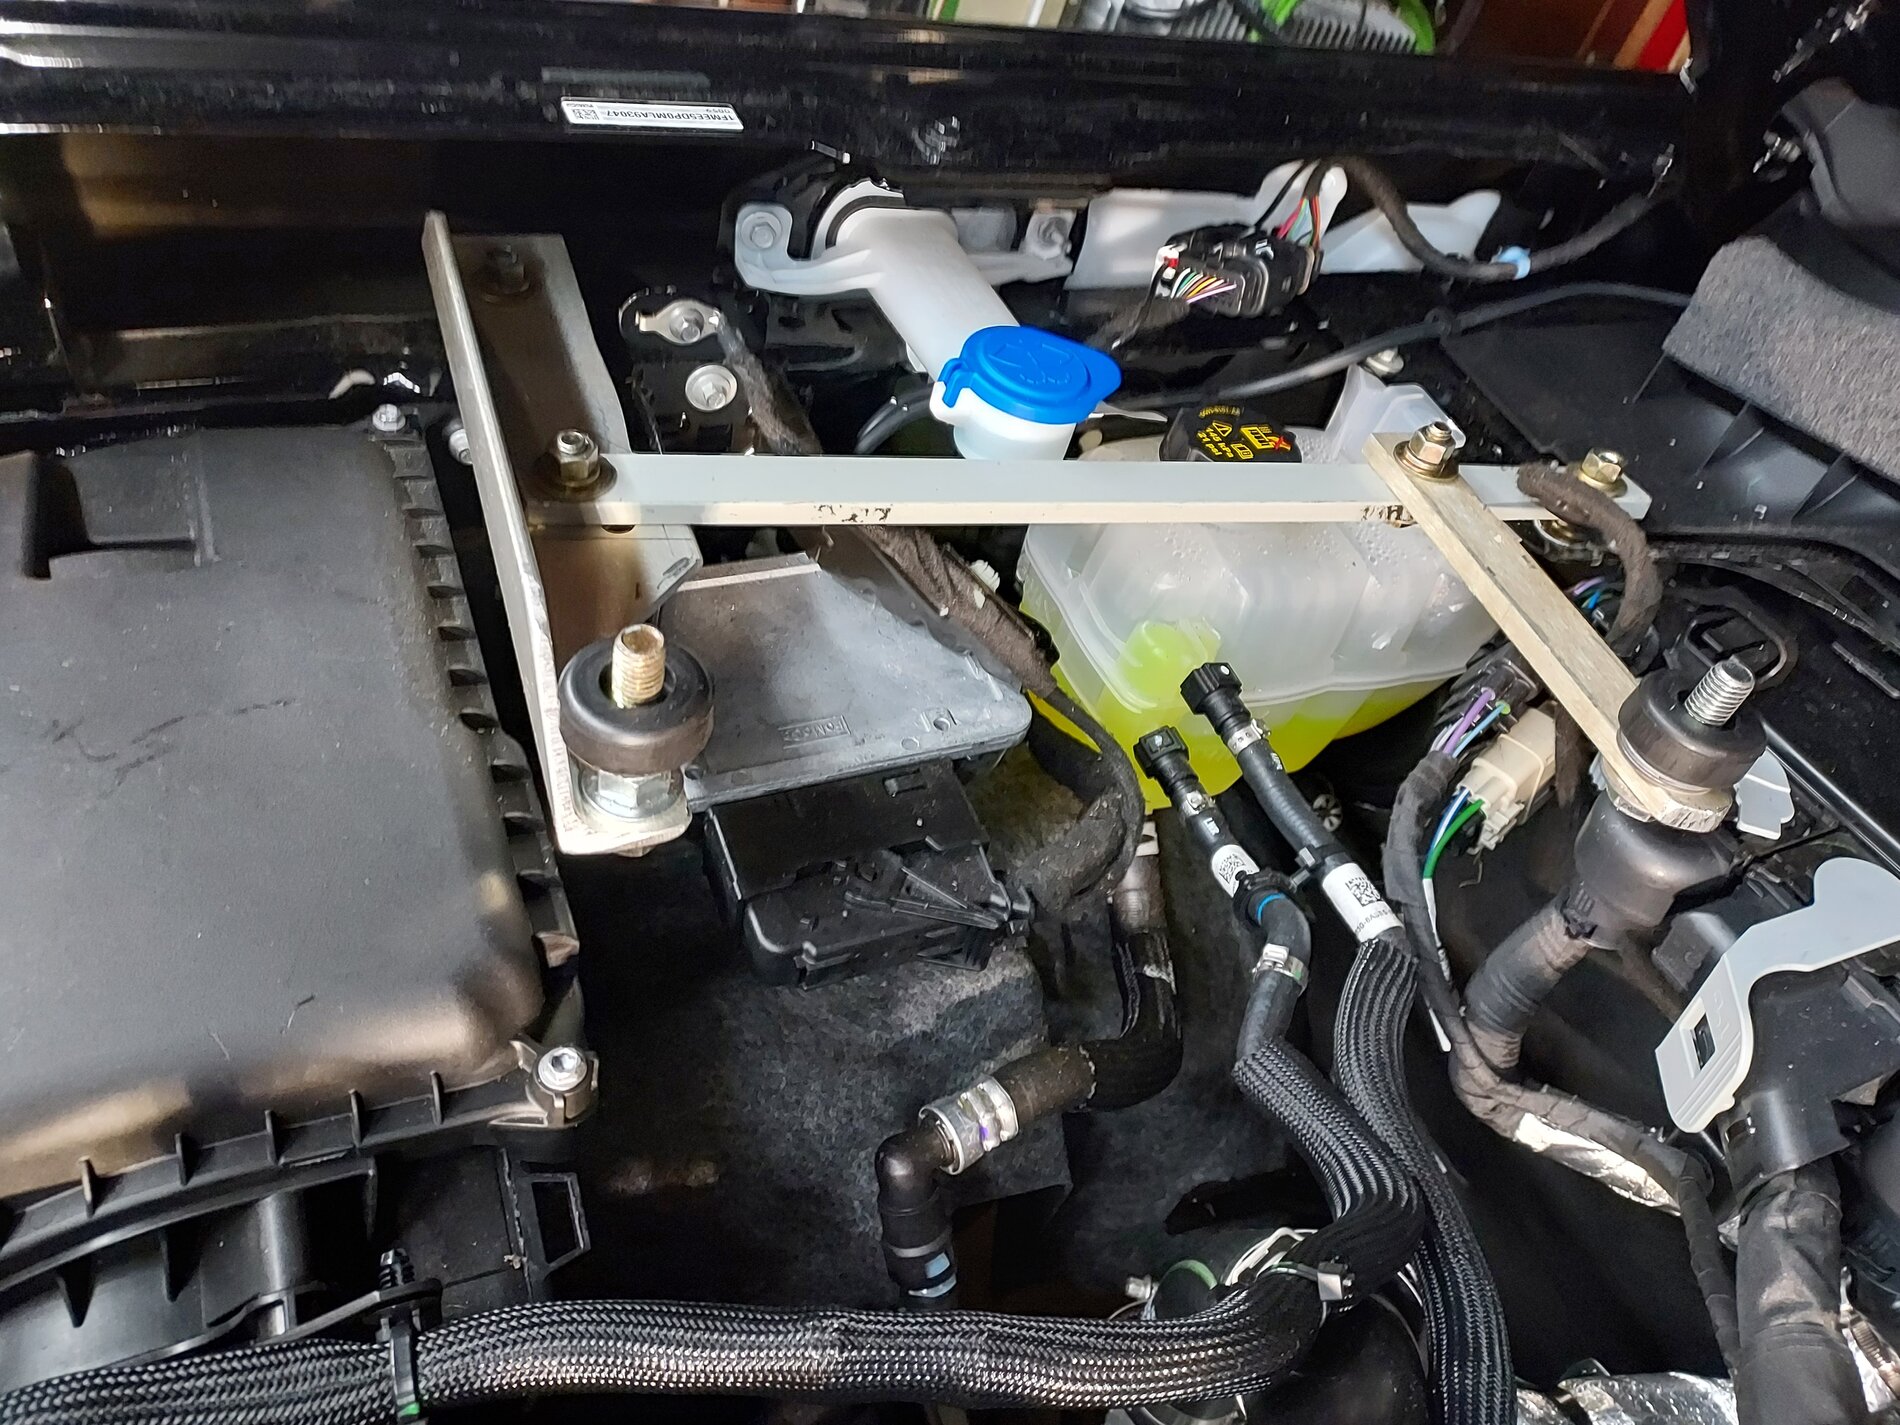 Ford Bronco ARB Dual Compressor Installed - Under Hood 2.7L Engine Compartment Compressor Mount Installed in Bronco